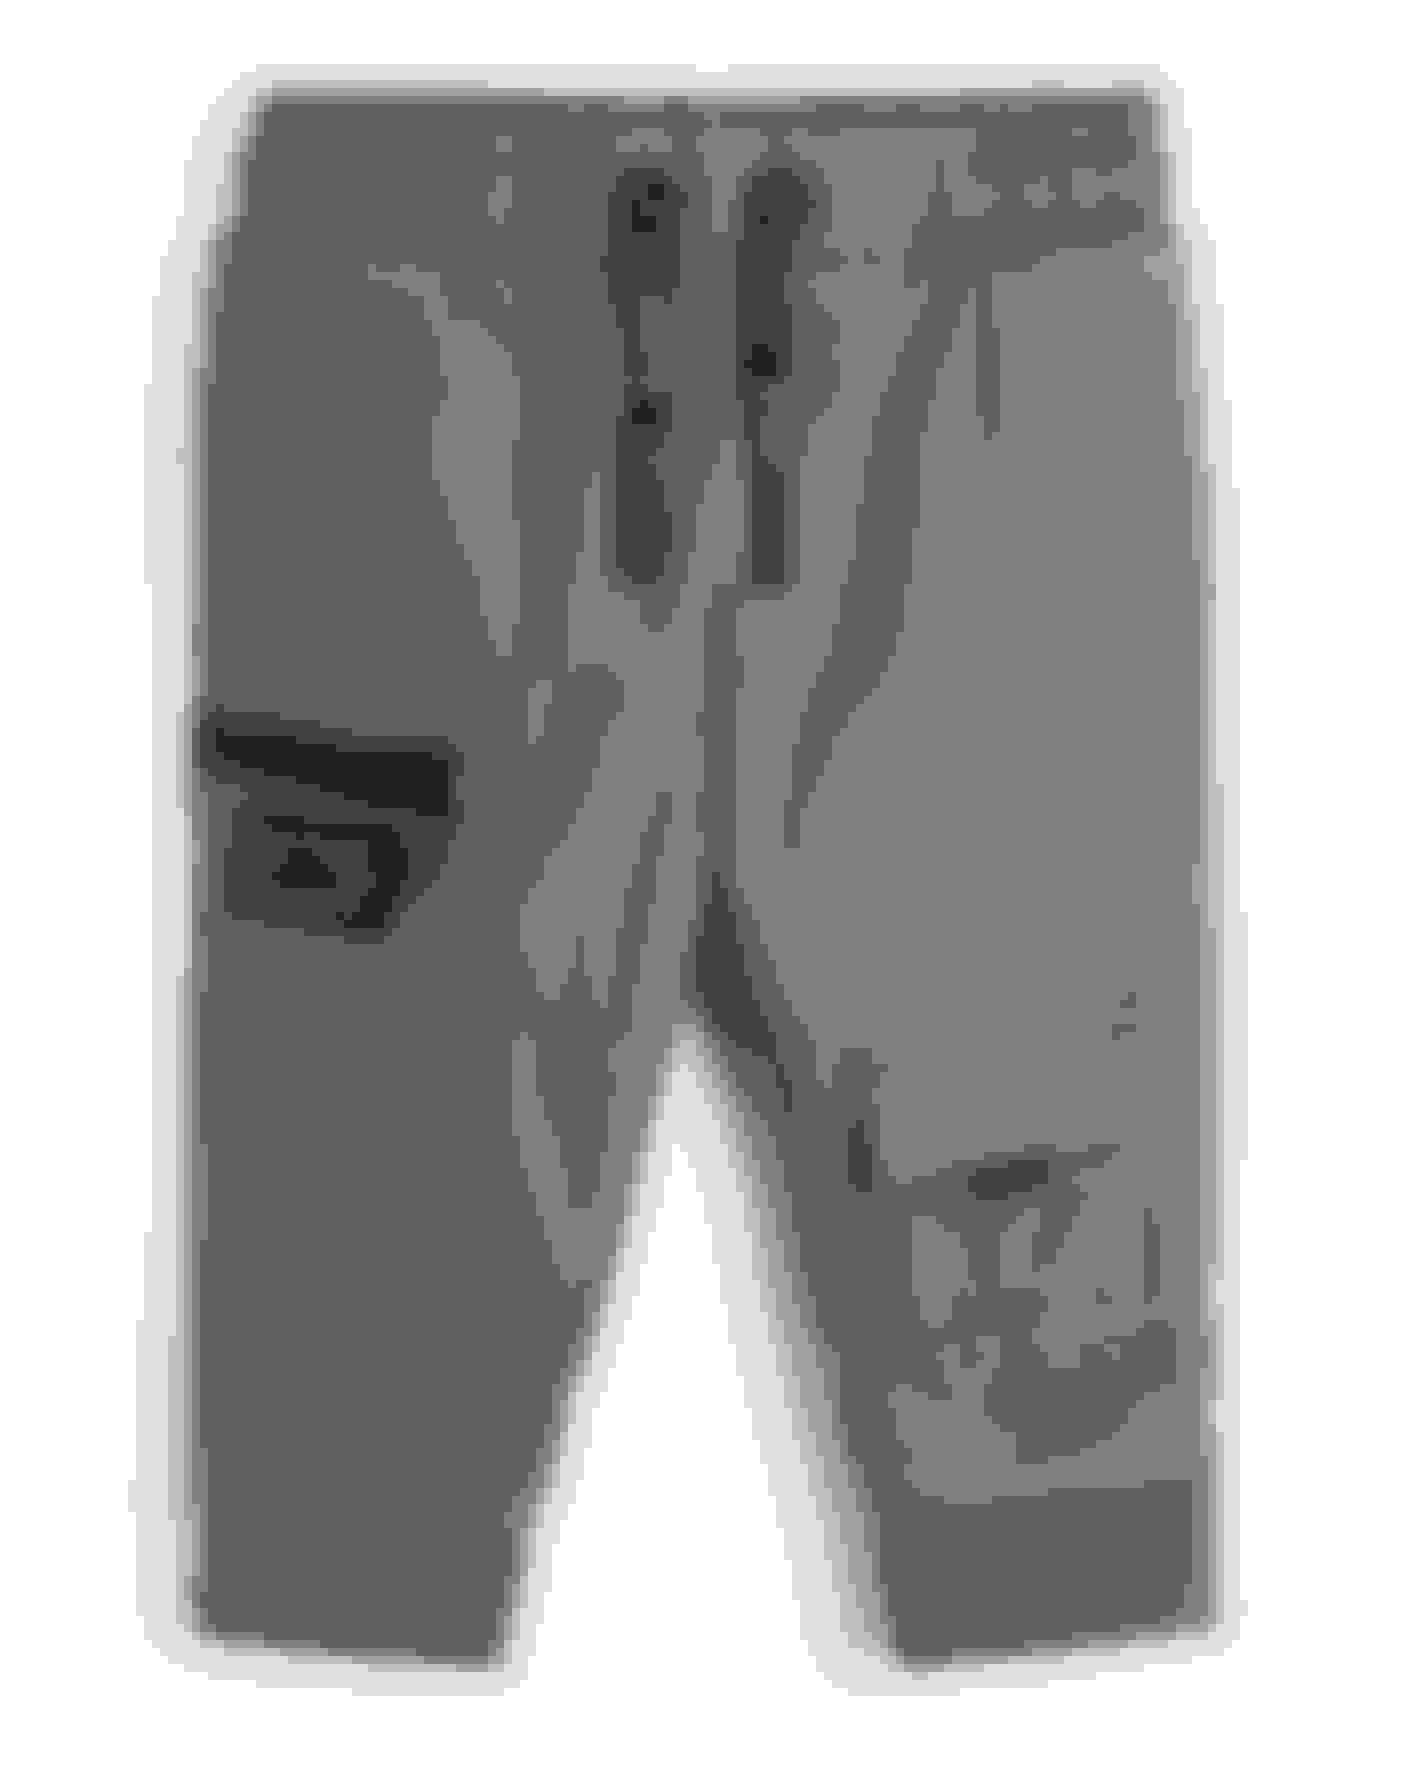 Khaki Cargo Pocket Trousers Ted Baker